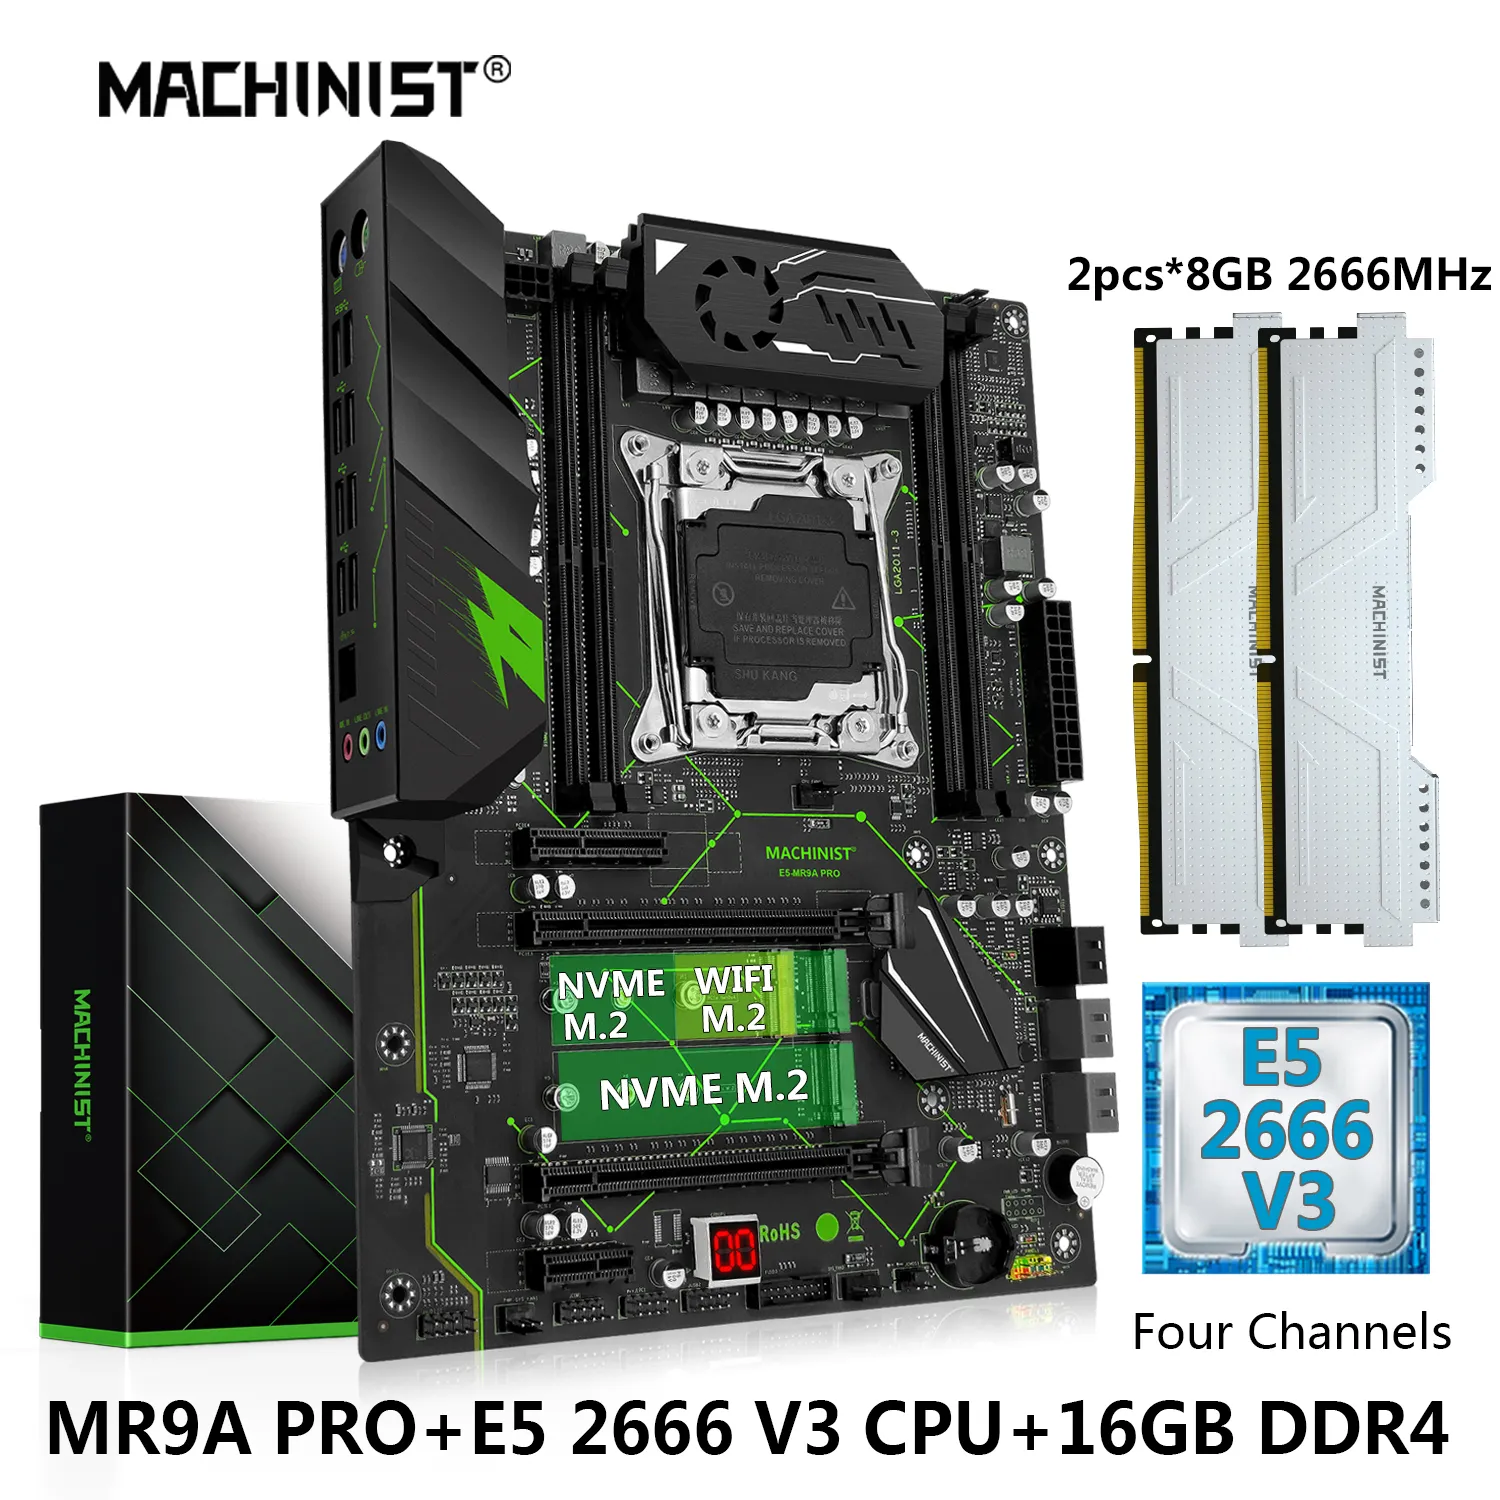 MACHINIST-X99 Kit Conjunto de Placa-Mãe, CPU Xeon E5 2666 V3, Processador LGA 2011-3, 16GB = 2x8G, Memória RAM DDR4, 2666Mhz, NVME, M.2, MR9A PRO